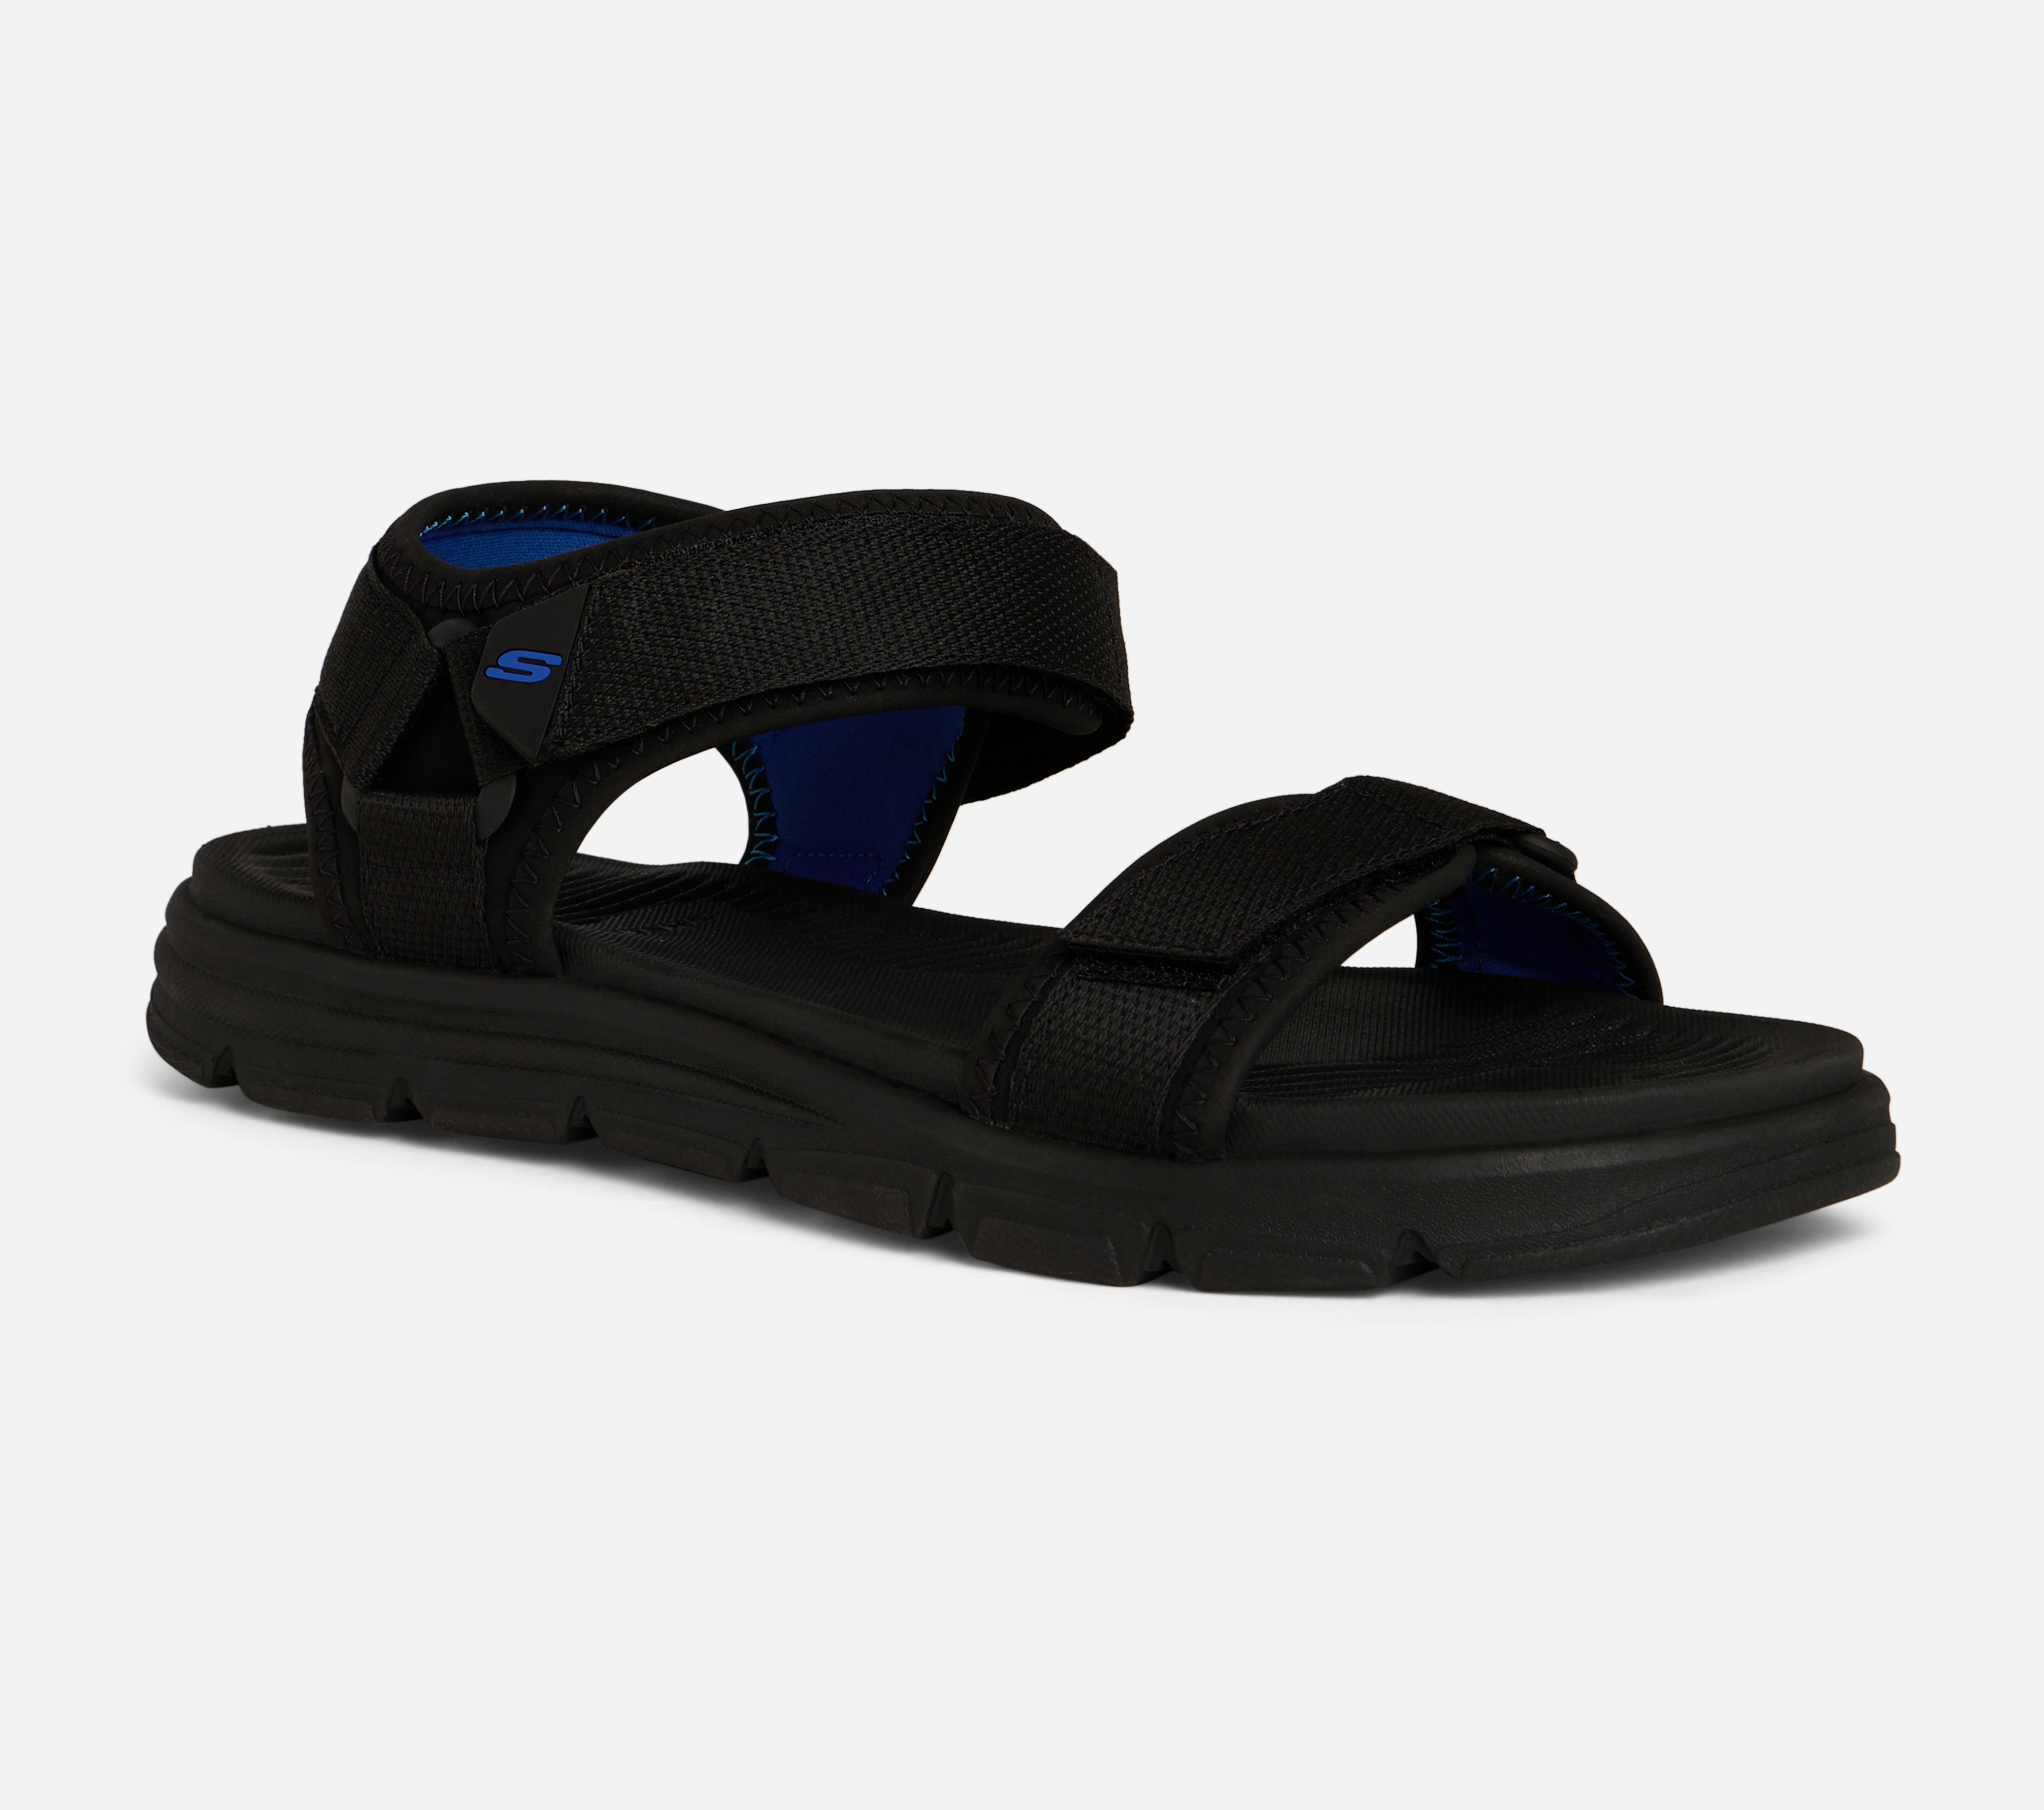 WIND SWELL - SWELL SWIFT, BLACK/BLUE Footwear Right View